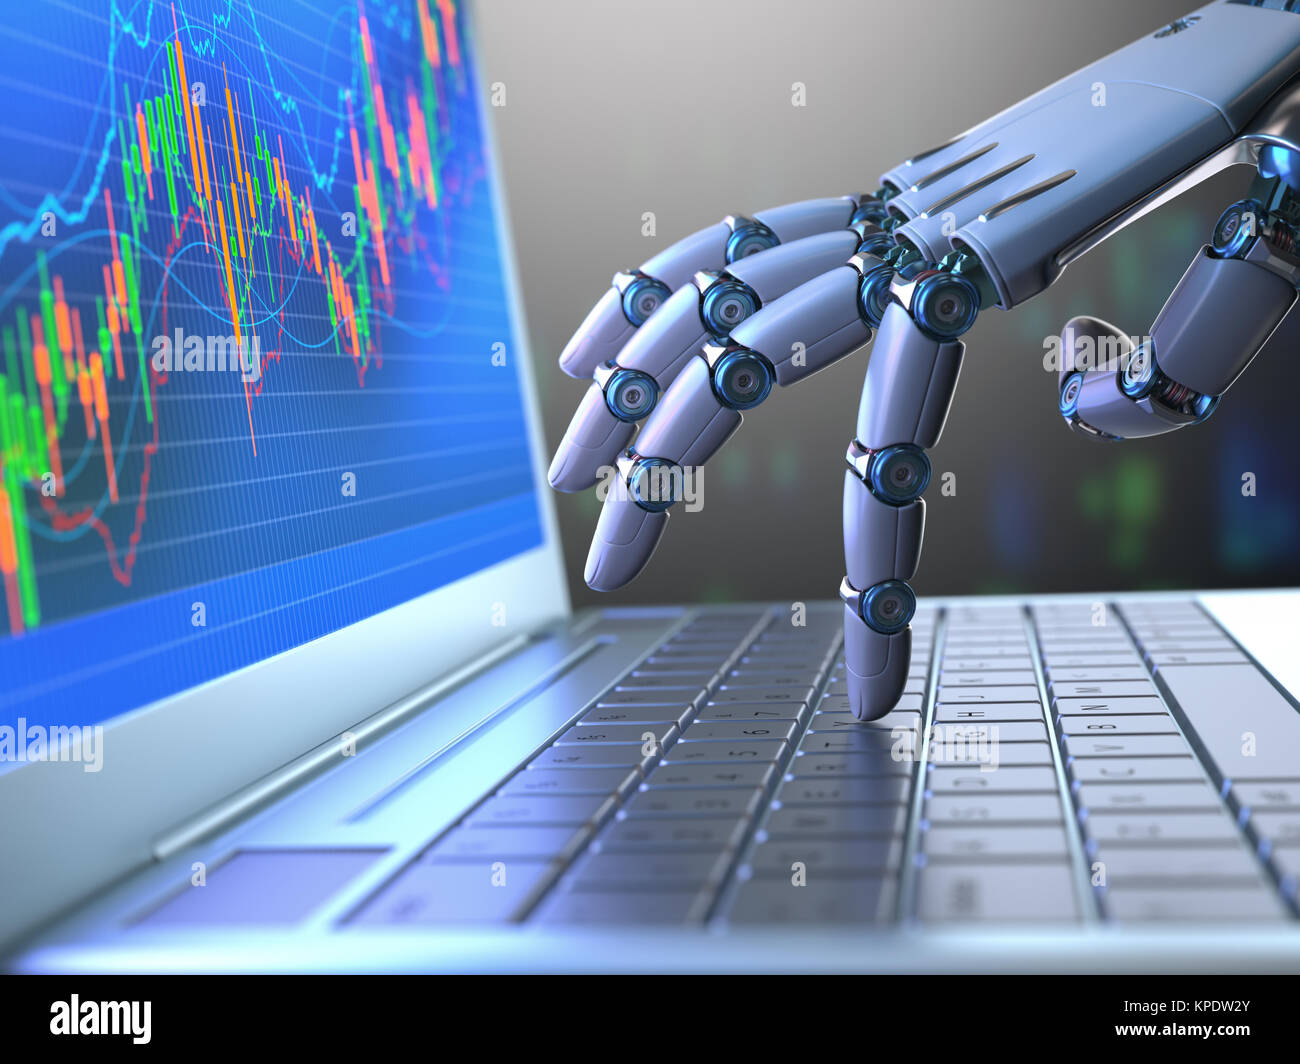 Stock Market Robot Trading Stock Photo